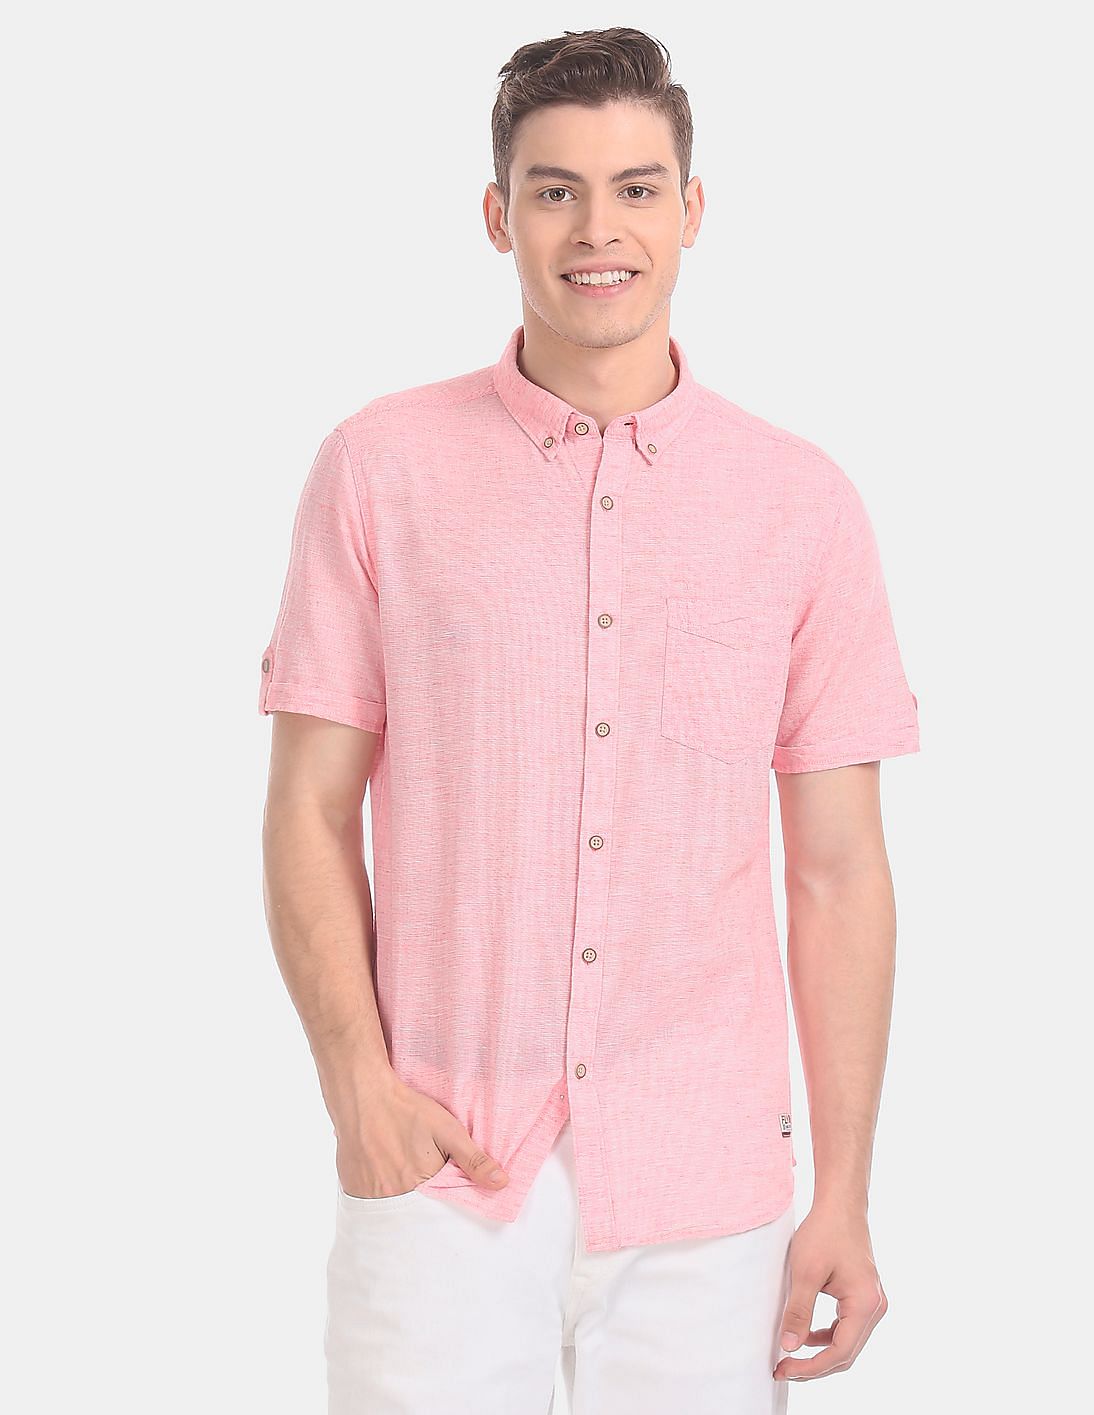 HIMIWAY Short Sleeve Button Shirt Men'S Casual Short Sleeve Shirt Loose  Shirt with Pocket Hot Pink XXL 